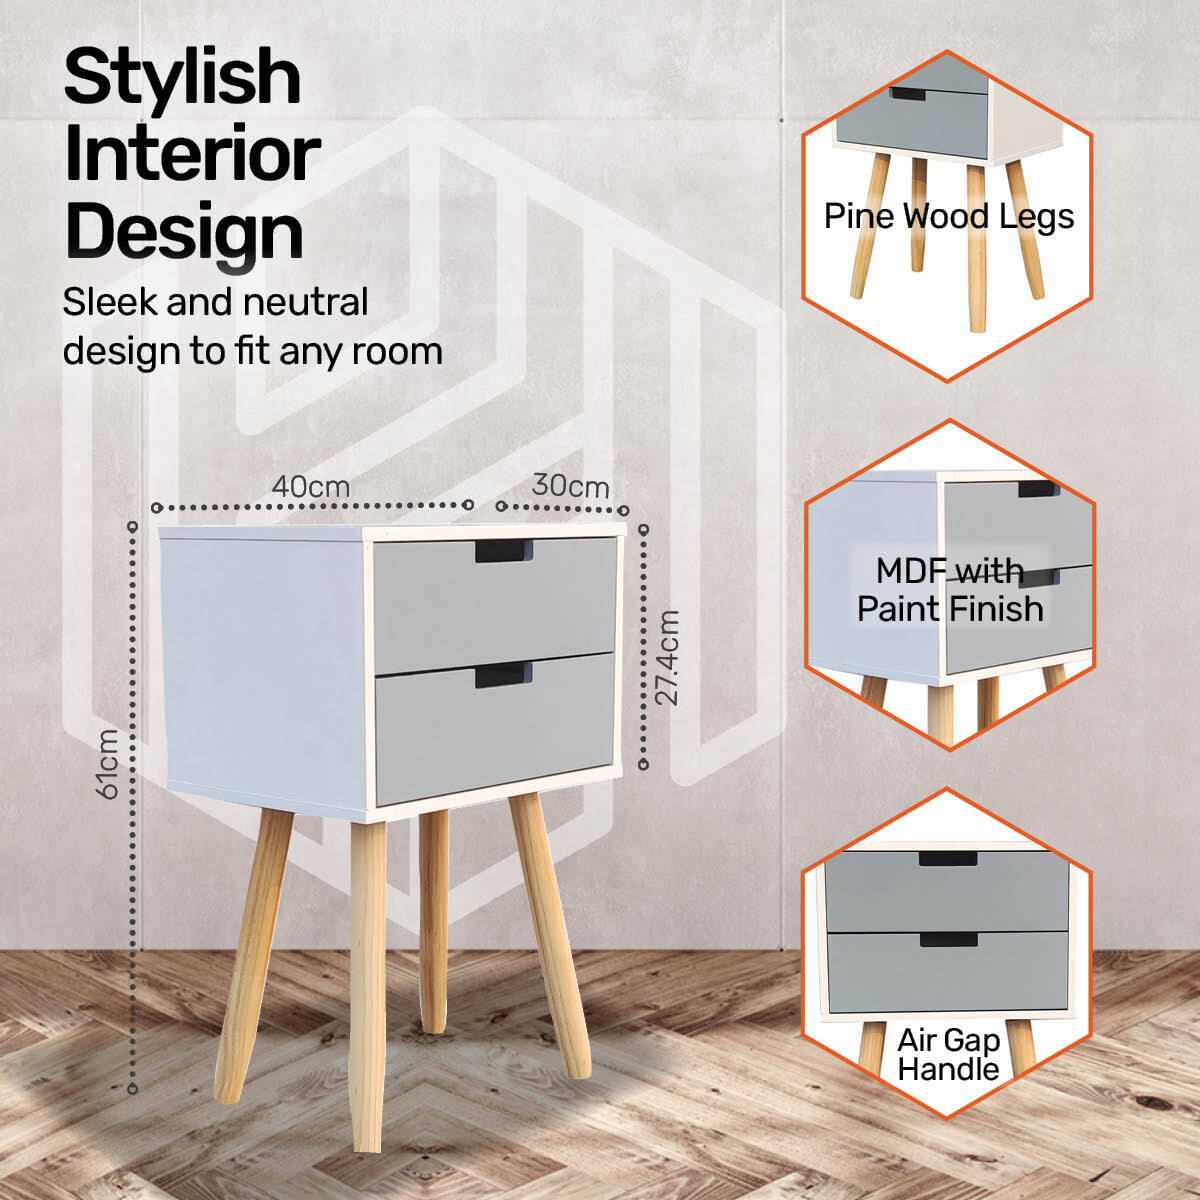 Home Master 2 Drawer Side Table Modern Sleek & Stylish Neutral Design 61cm Deals499